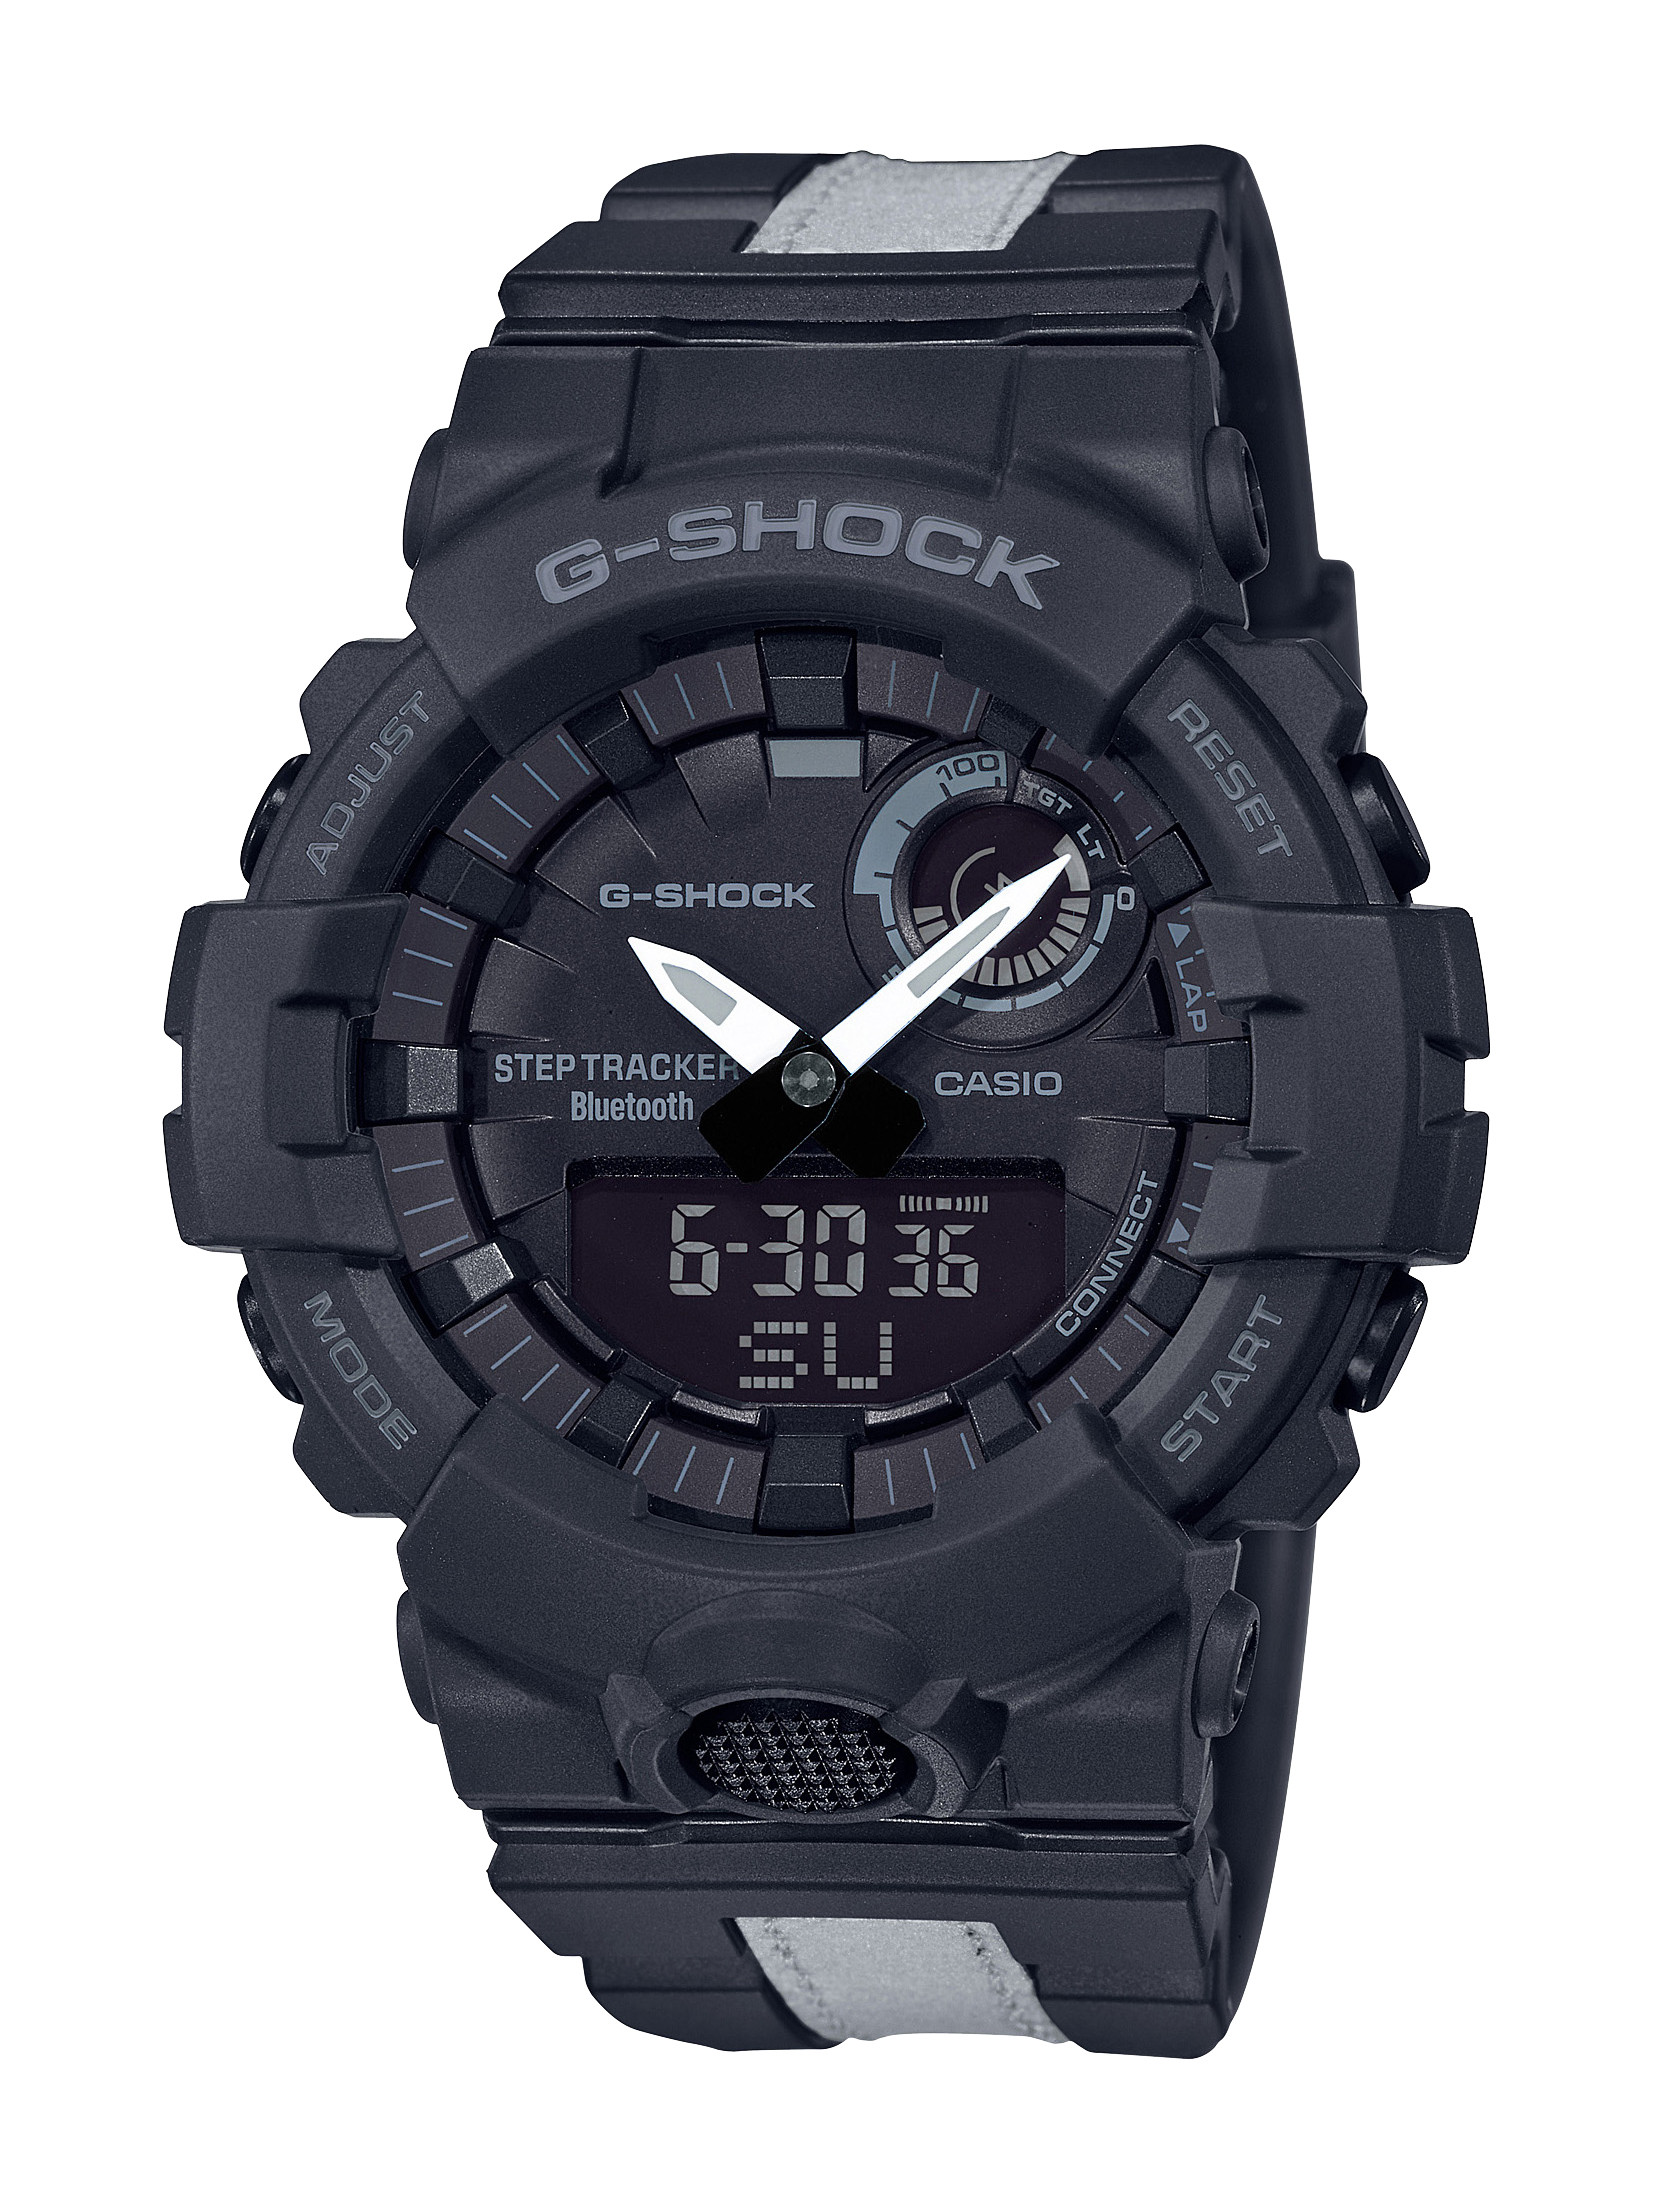 G-SHOCK GBA800LU-1 Black Analog Digital Watch –54mm